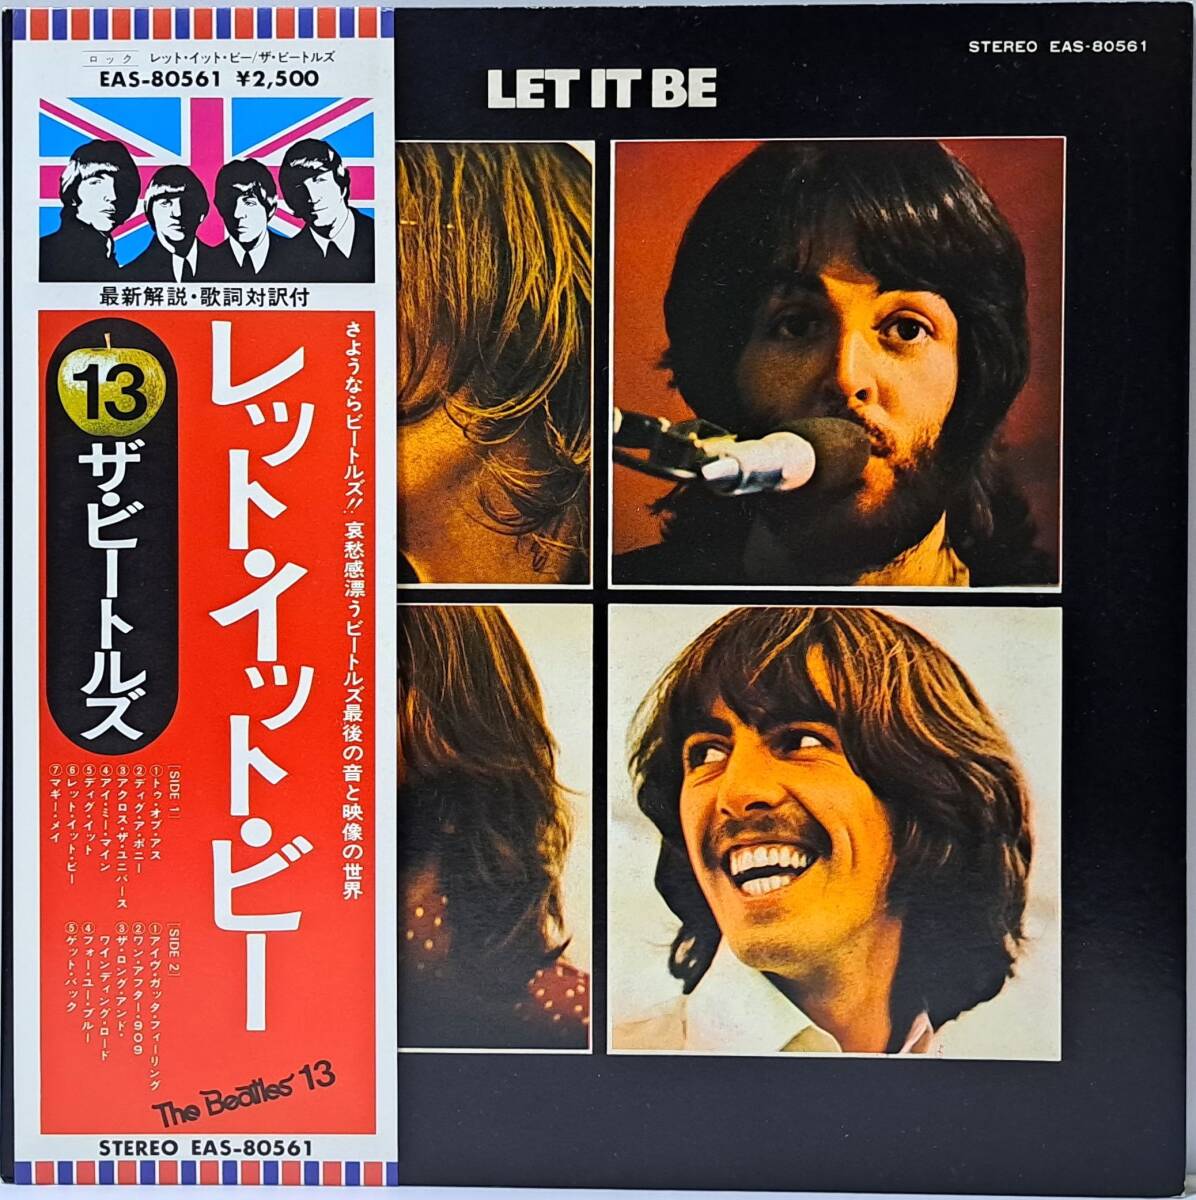 THE BEATLES : LET IT BE ビートルズ レット・イット・ビー 帯付き 国内盤 中古 アナログ LPレコード盤 1976年 EAS-80561 M2-KDO-1430の画像1